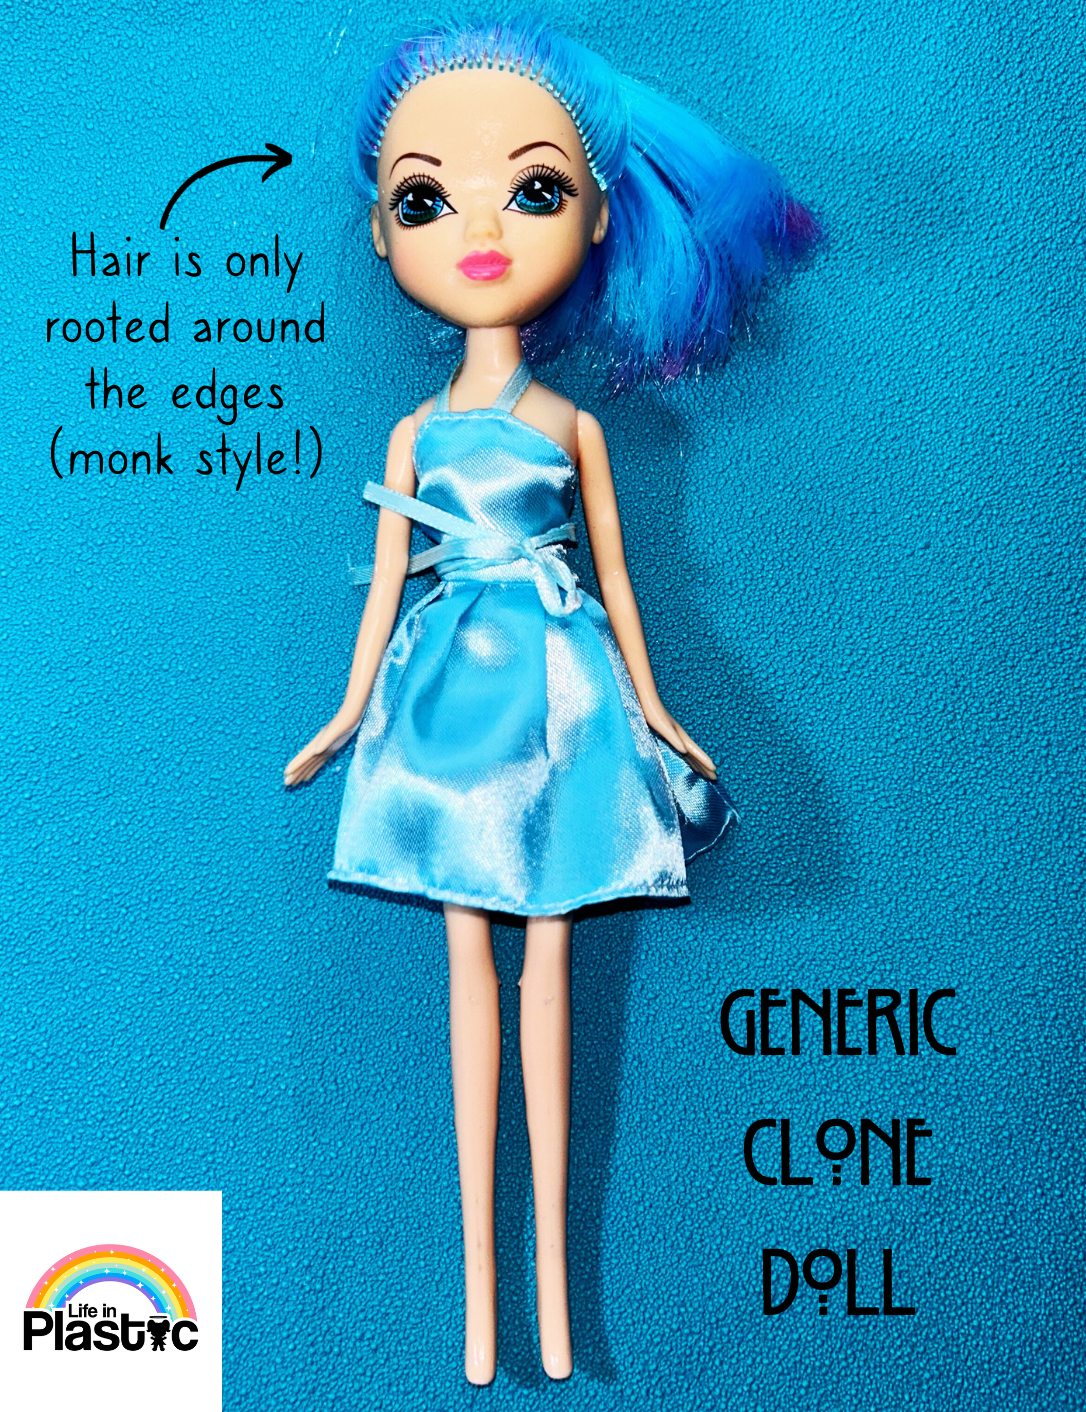 Generic Clone Doll